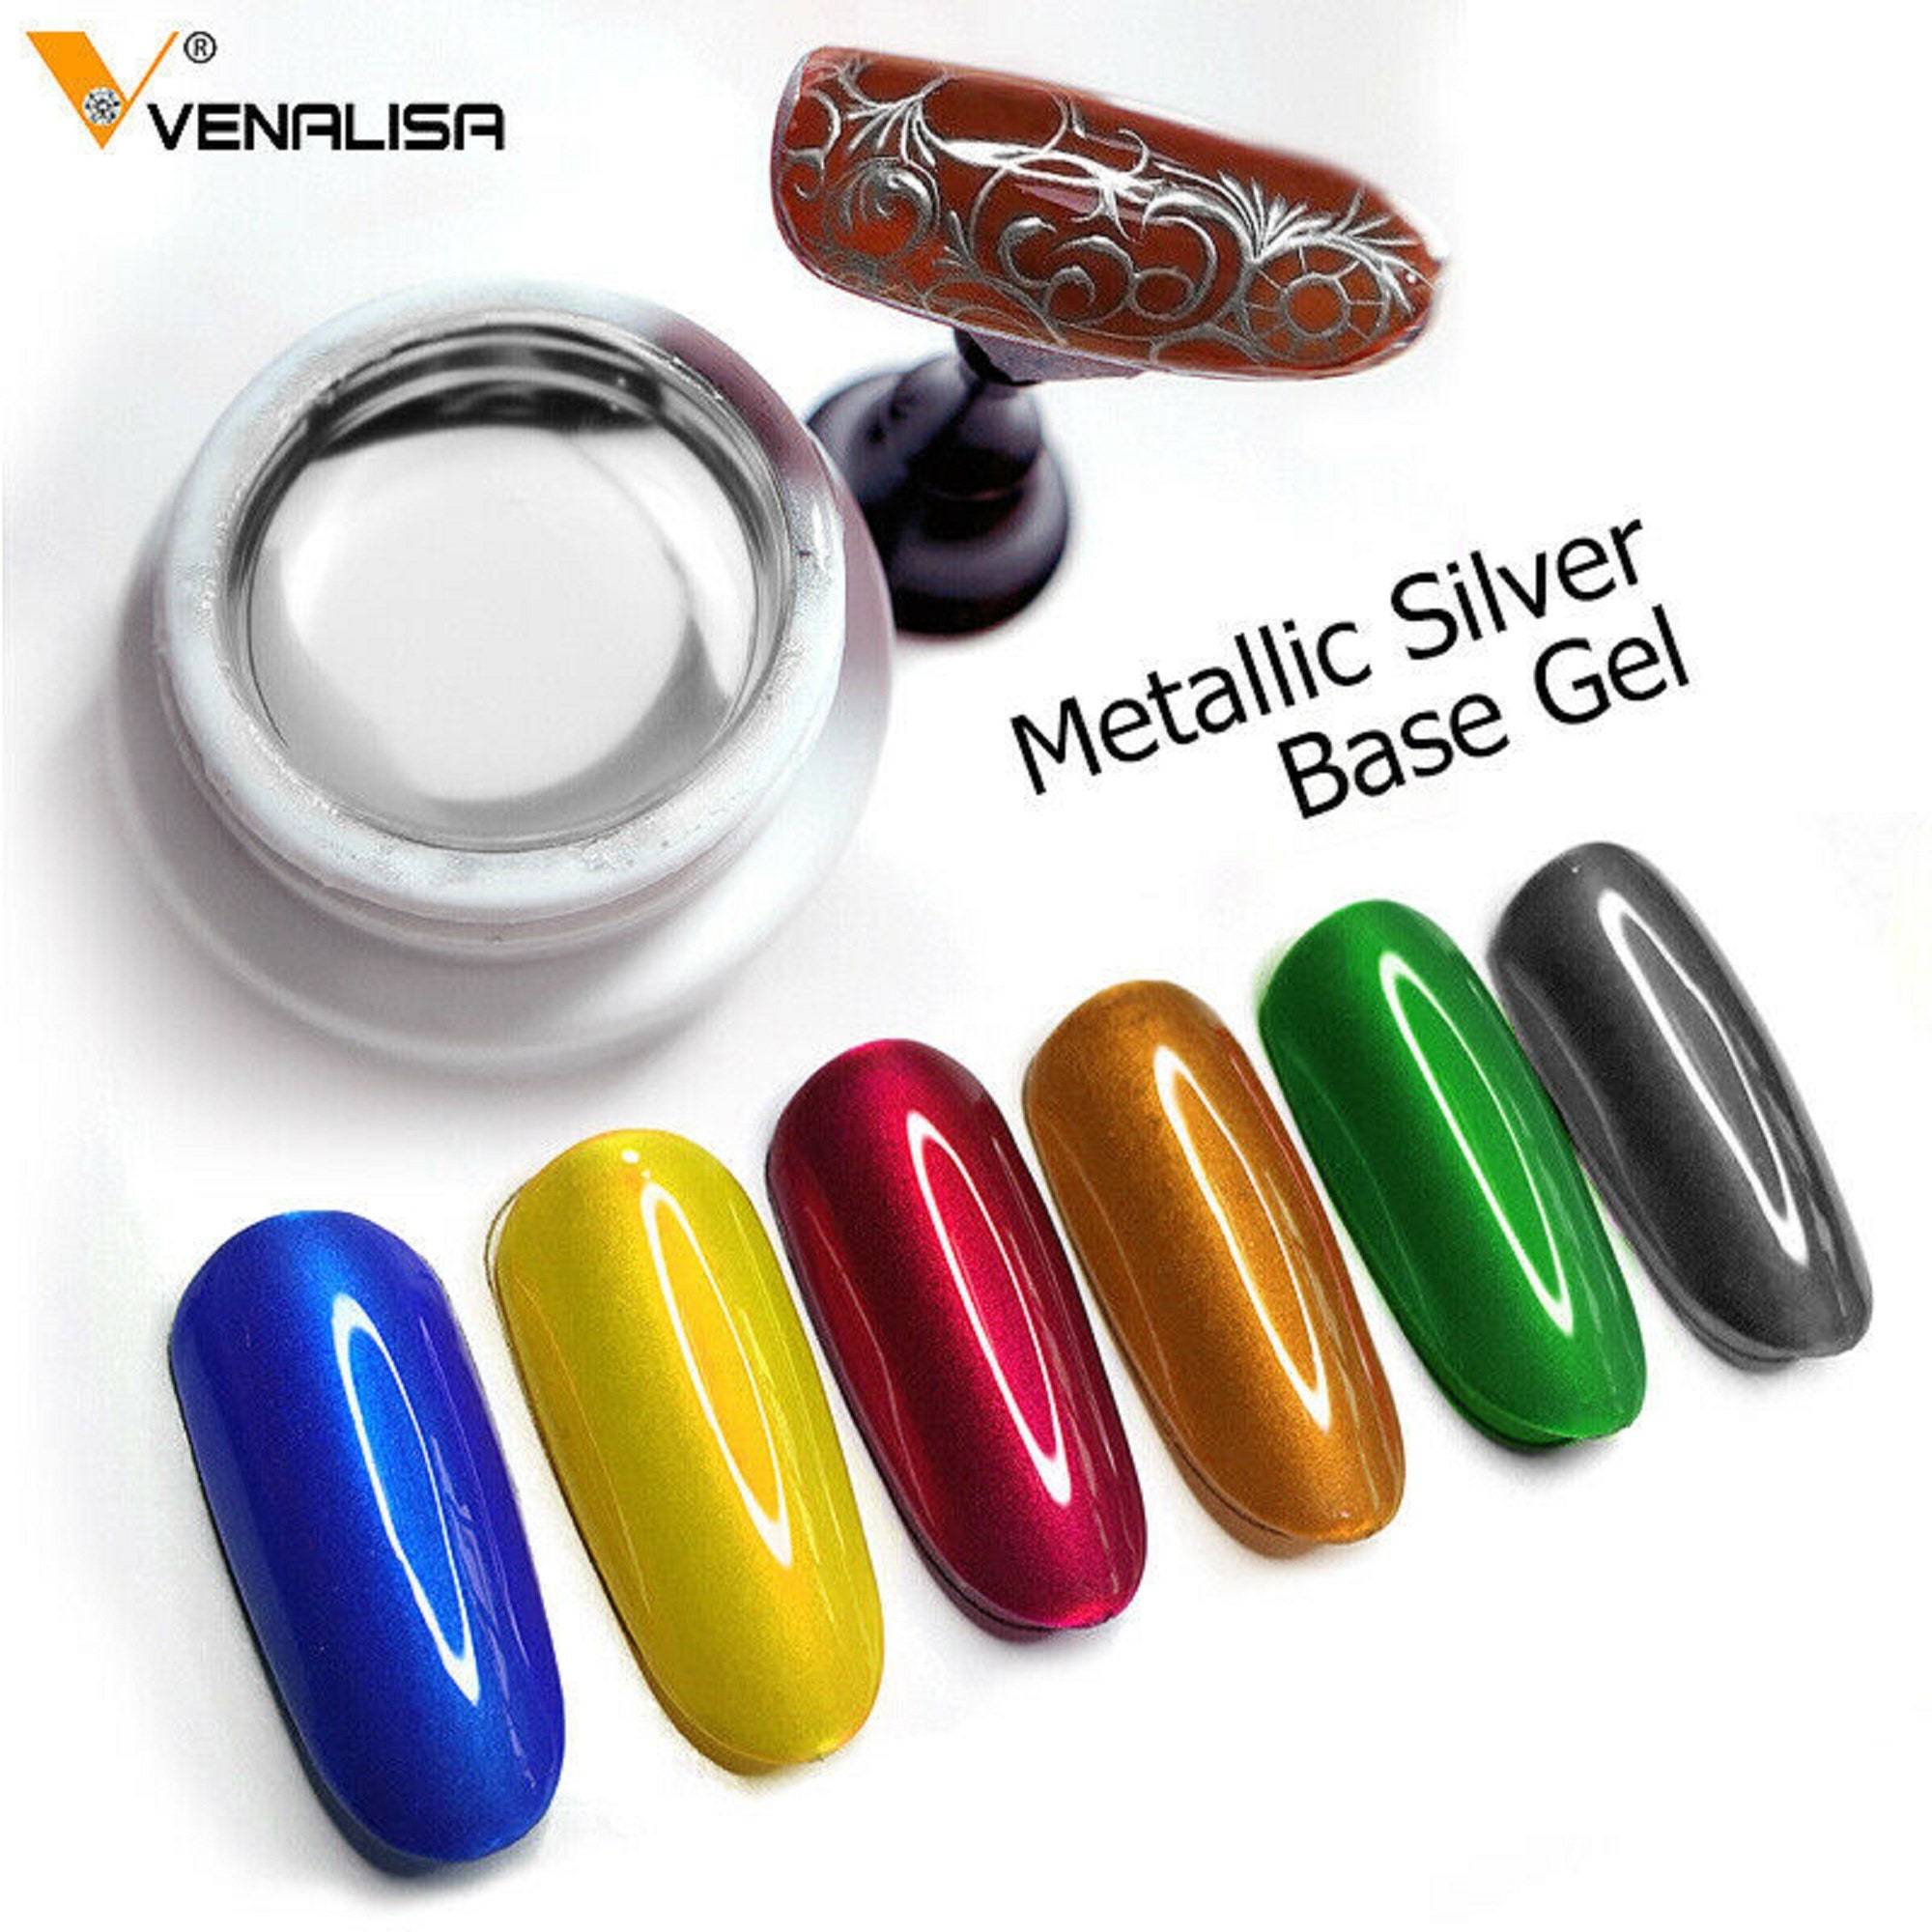 4 Coloroptional Mirror Platinum Glue Metal Paint Glue Pull Wire Cute Nail  Charms